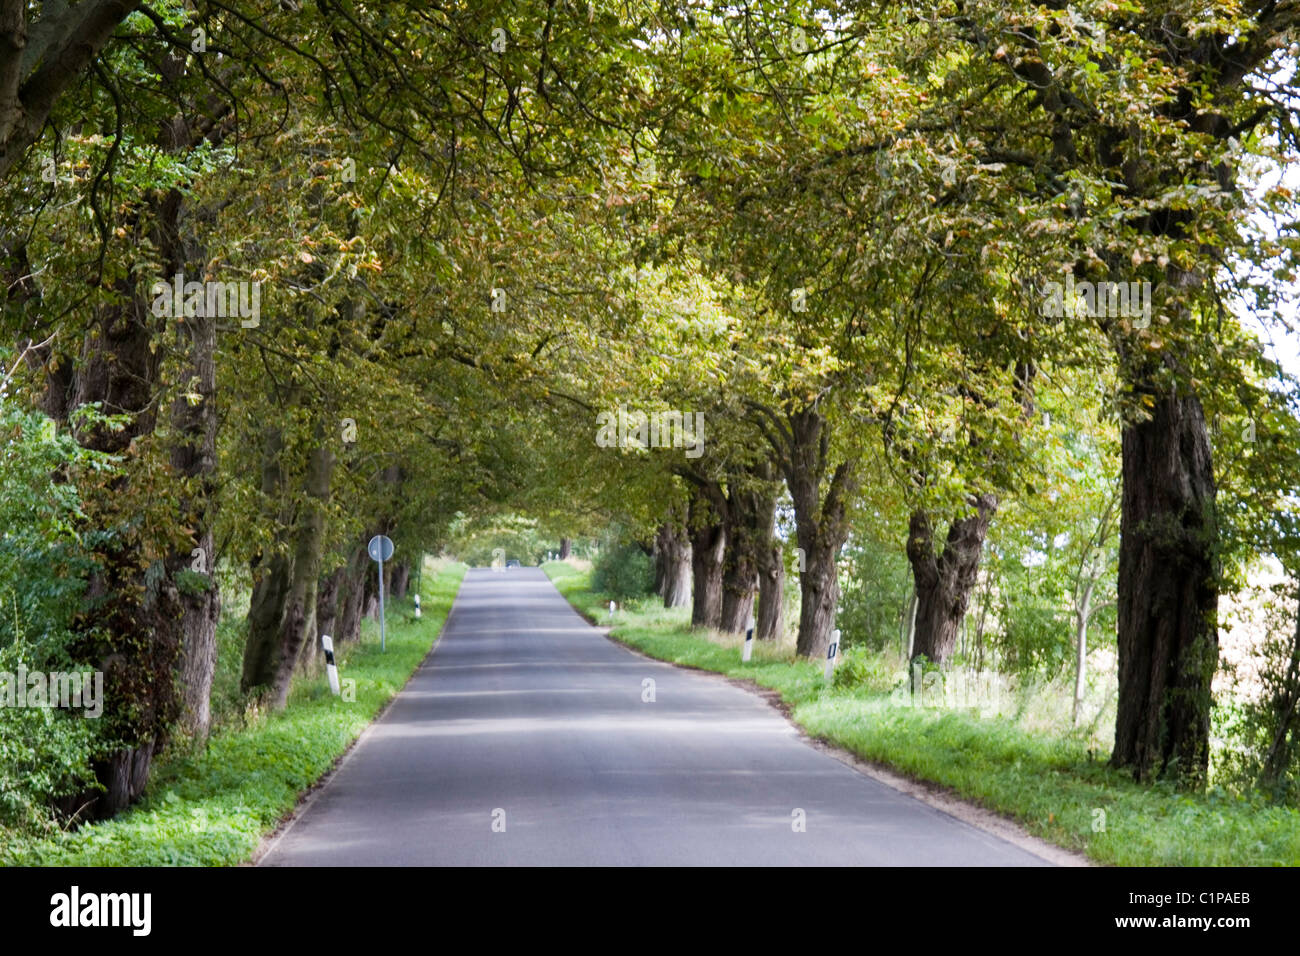 Germania, Rügen, strade orlate da alberi Foto Stock